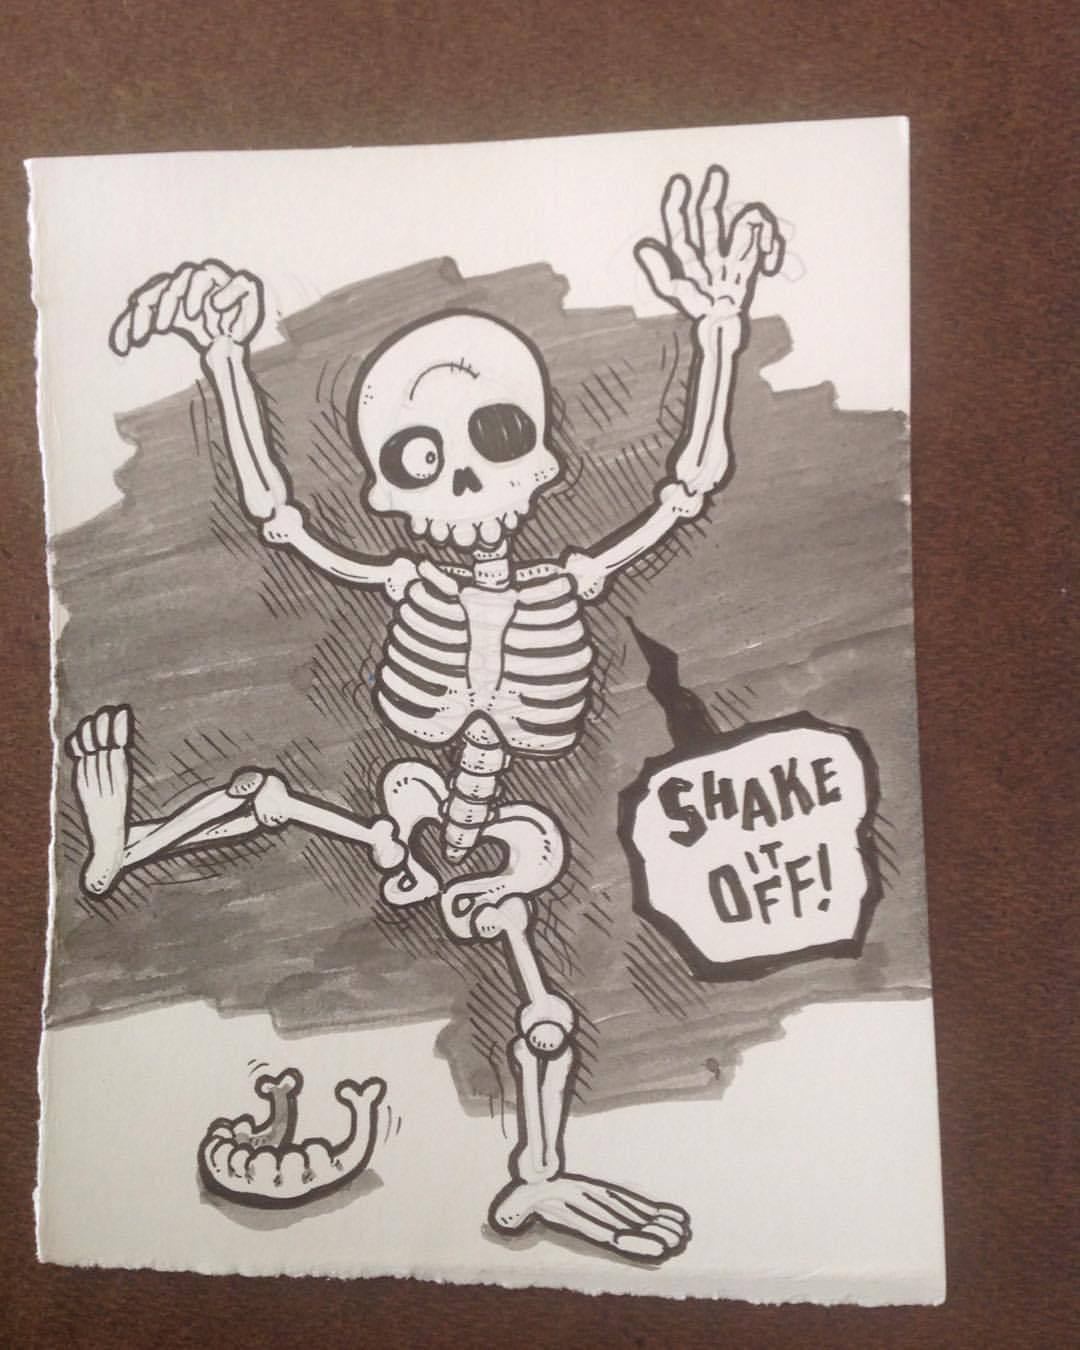 Day 24: A #Skeleton #sketch #skull #sketches #sketchbook #drawing #drawlloween #doodle #ink #inktober #shakeitoff #dance #halloween #spooky #scary